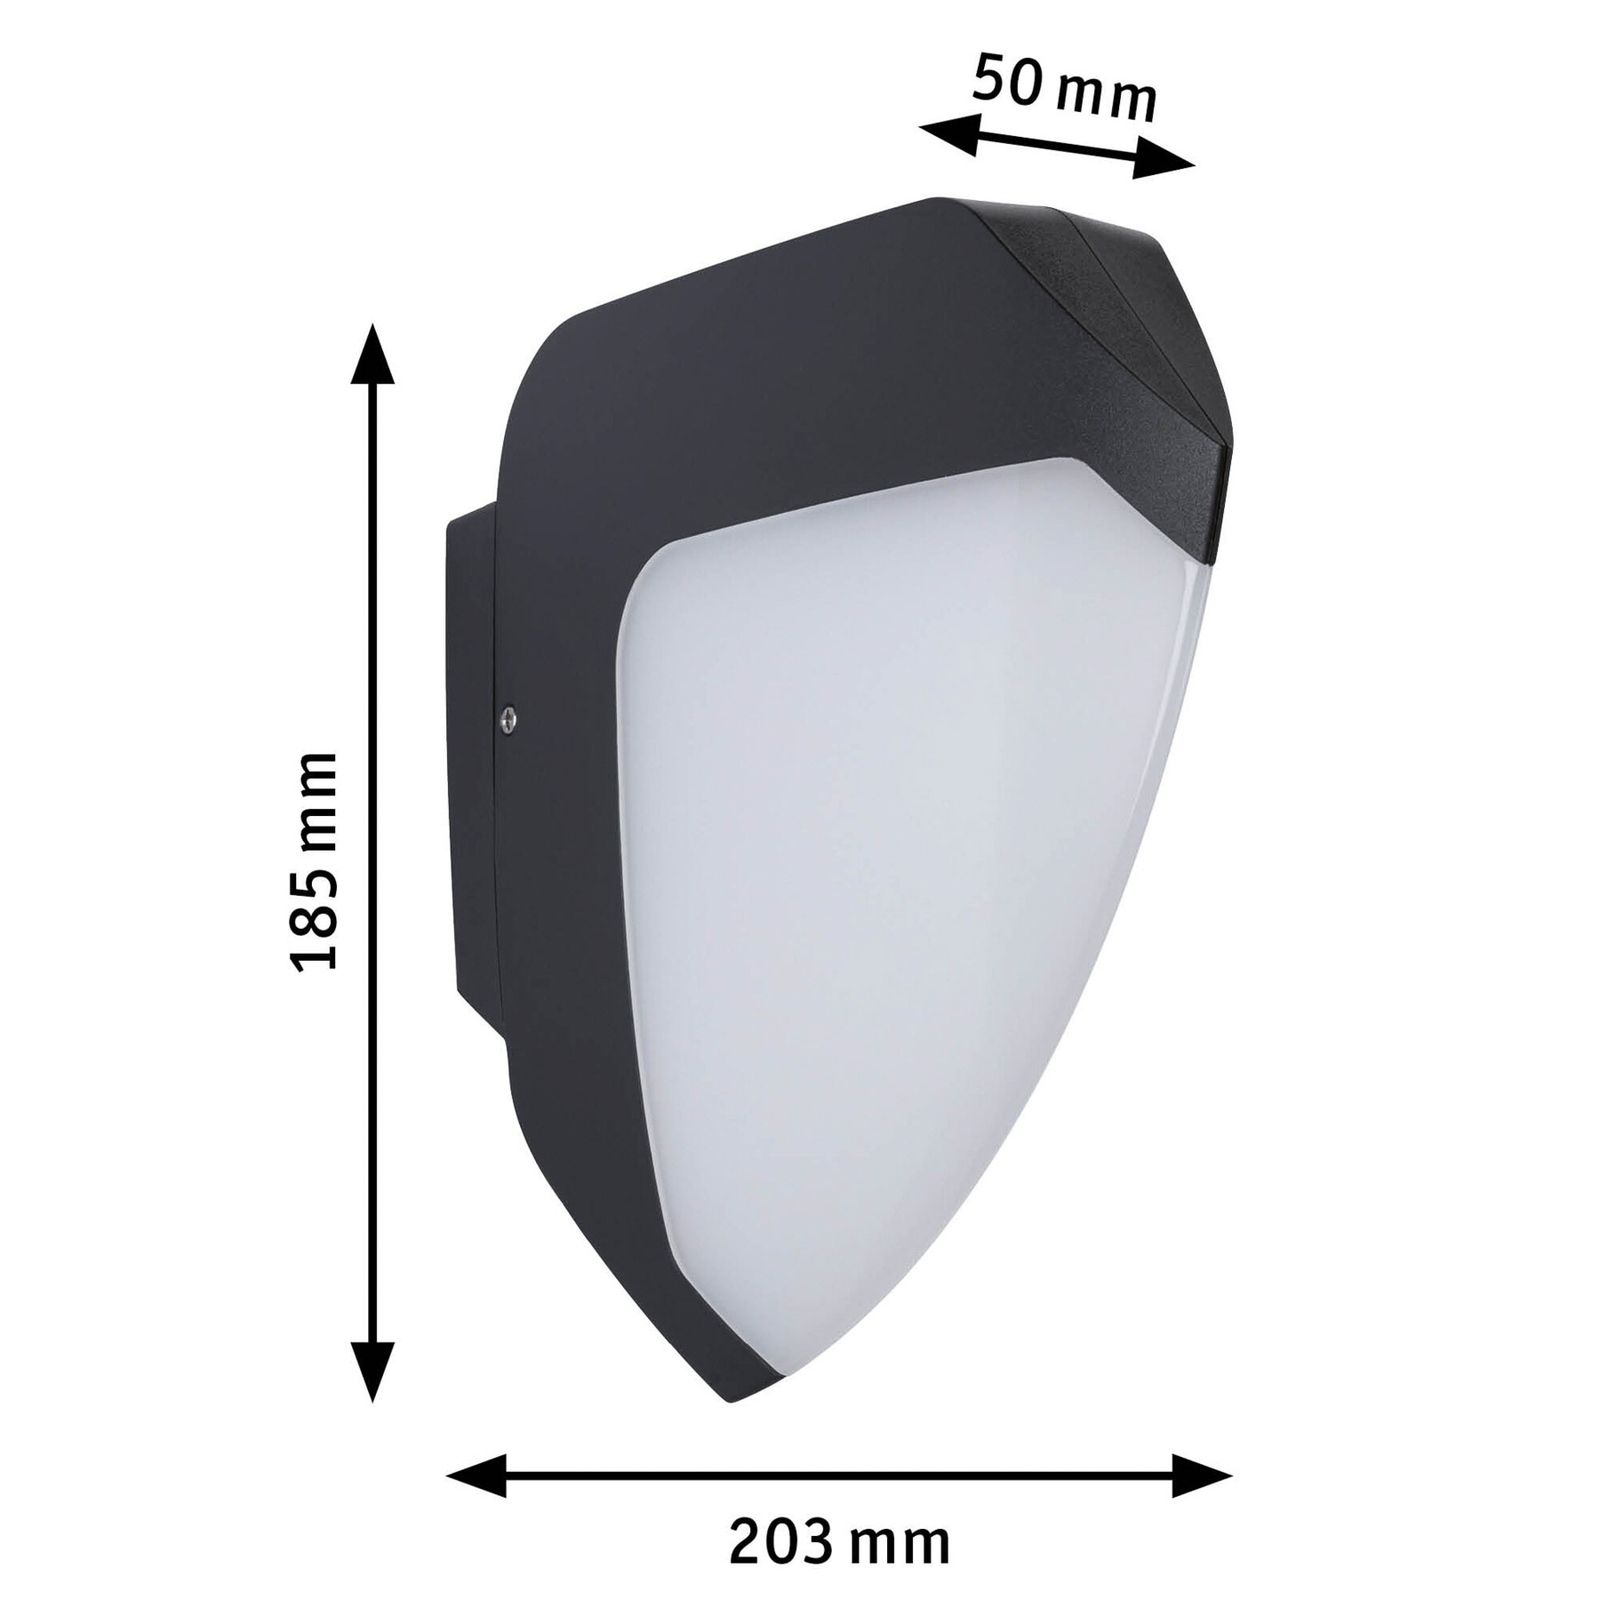 Paulmann Ikosea LED vägglampa för utomhusbruk, ZigBee 3.0